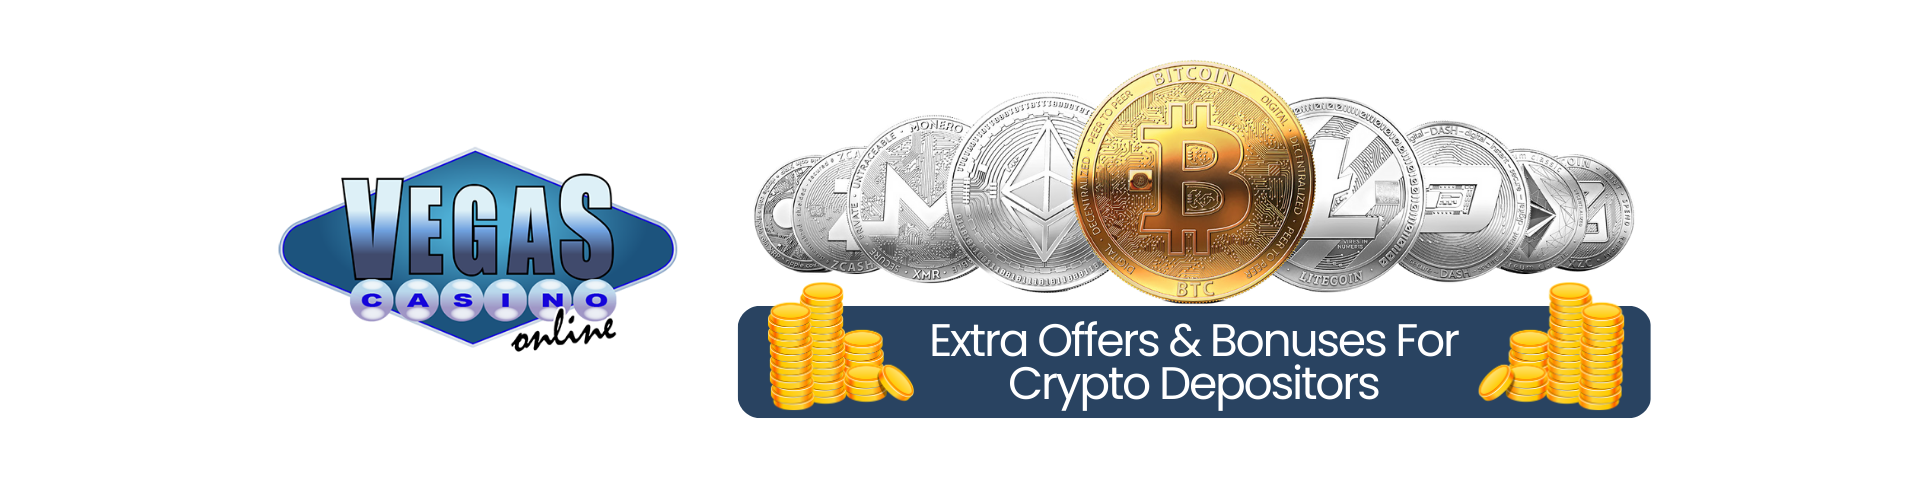 Vegas Casino Online - Extra Offers & Bonuses For Crypto Depositors